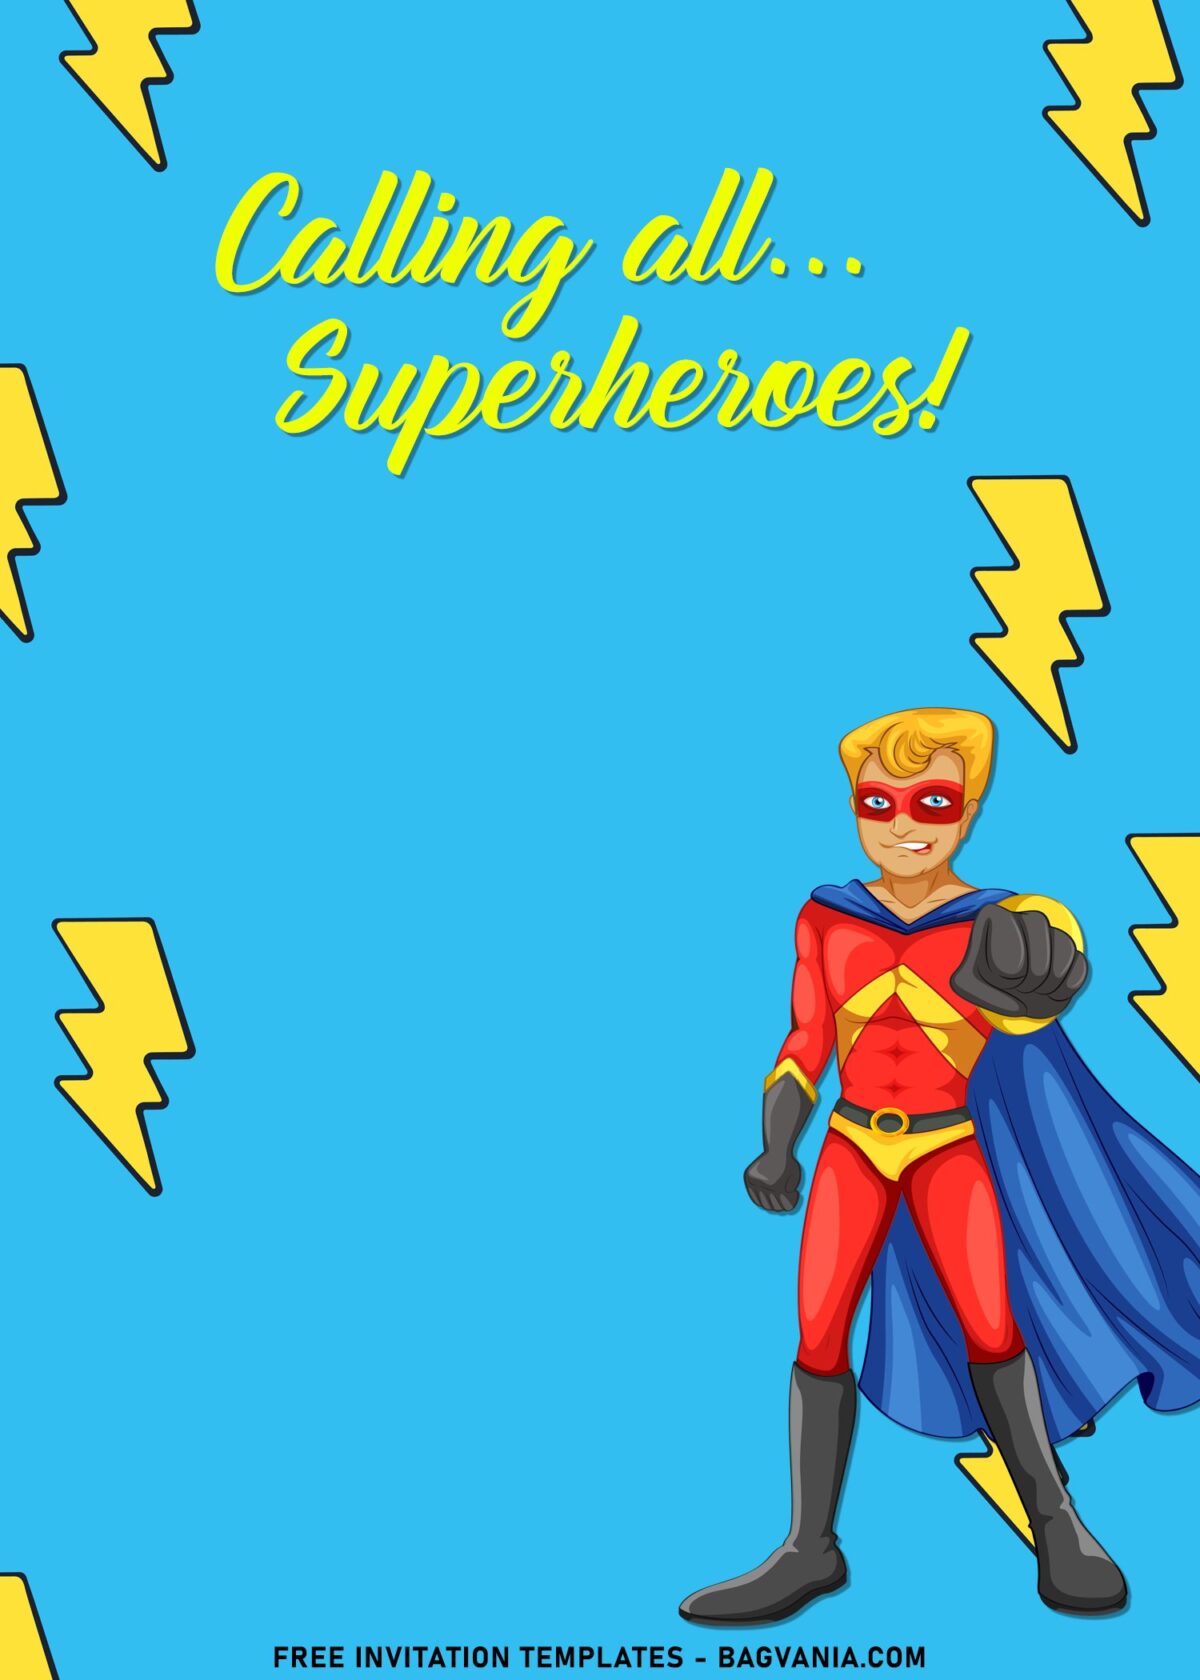 7+ Boys Superhero Birthday Invitation Templates For Your Son's Birthday with super cool cartoon superhero character